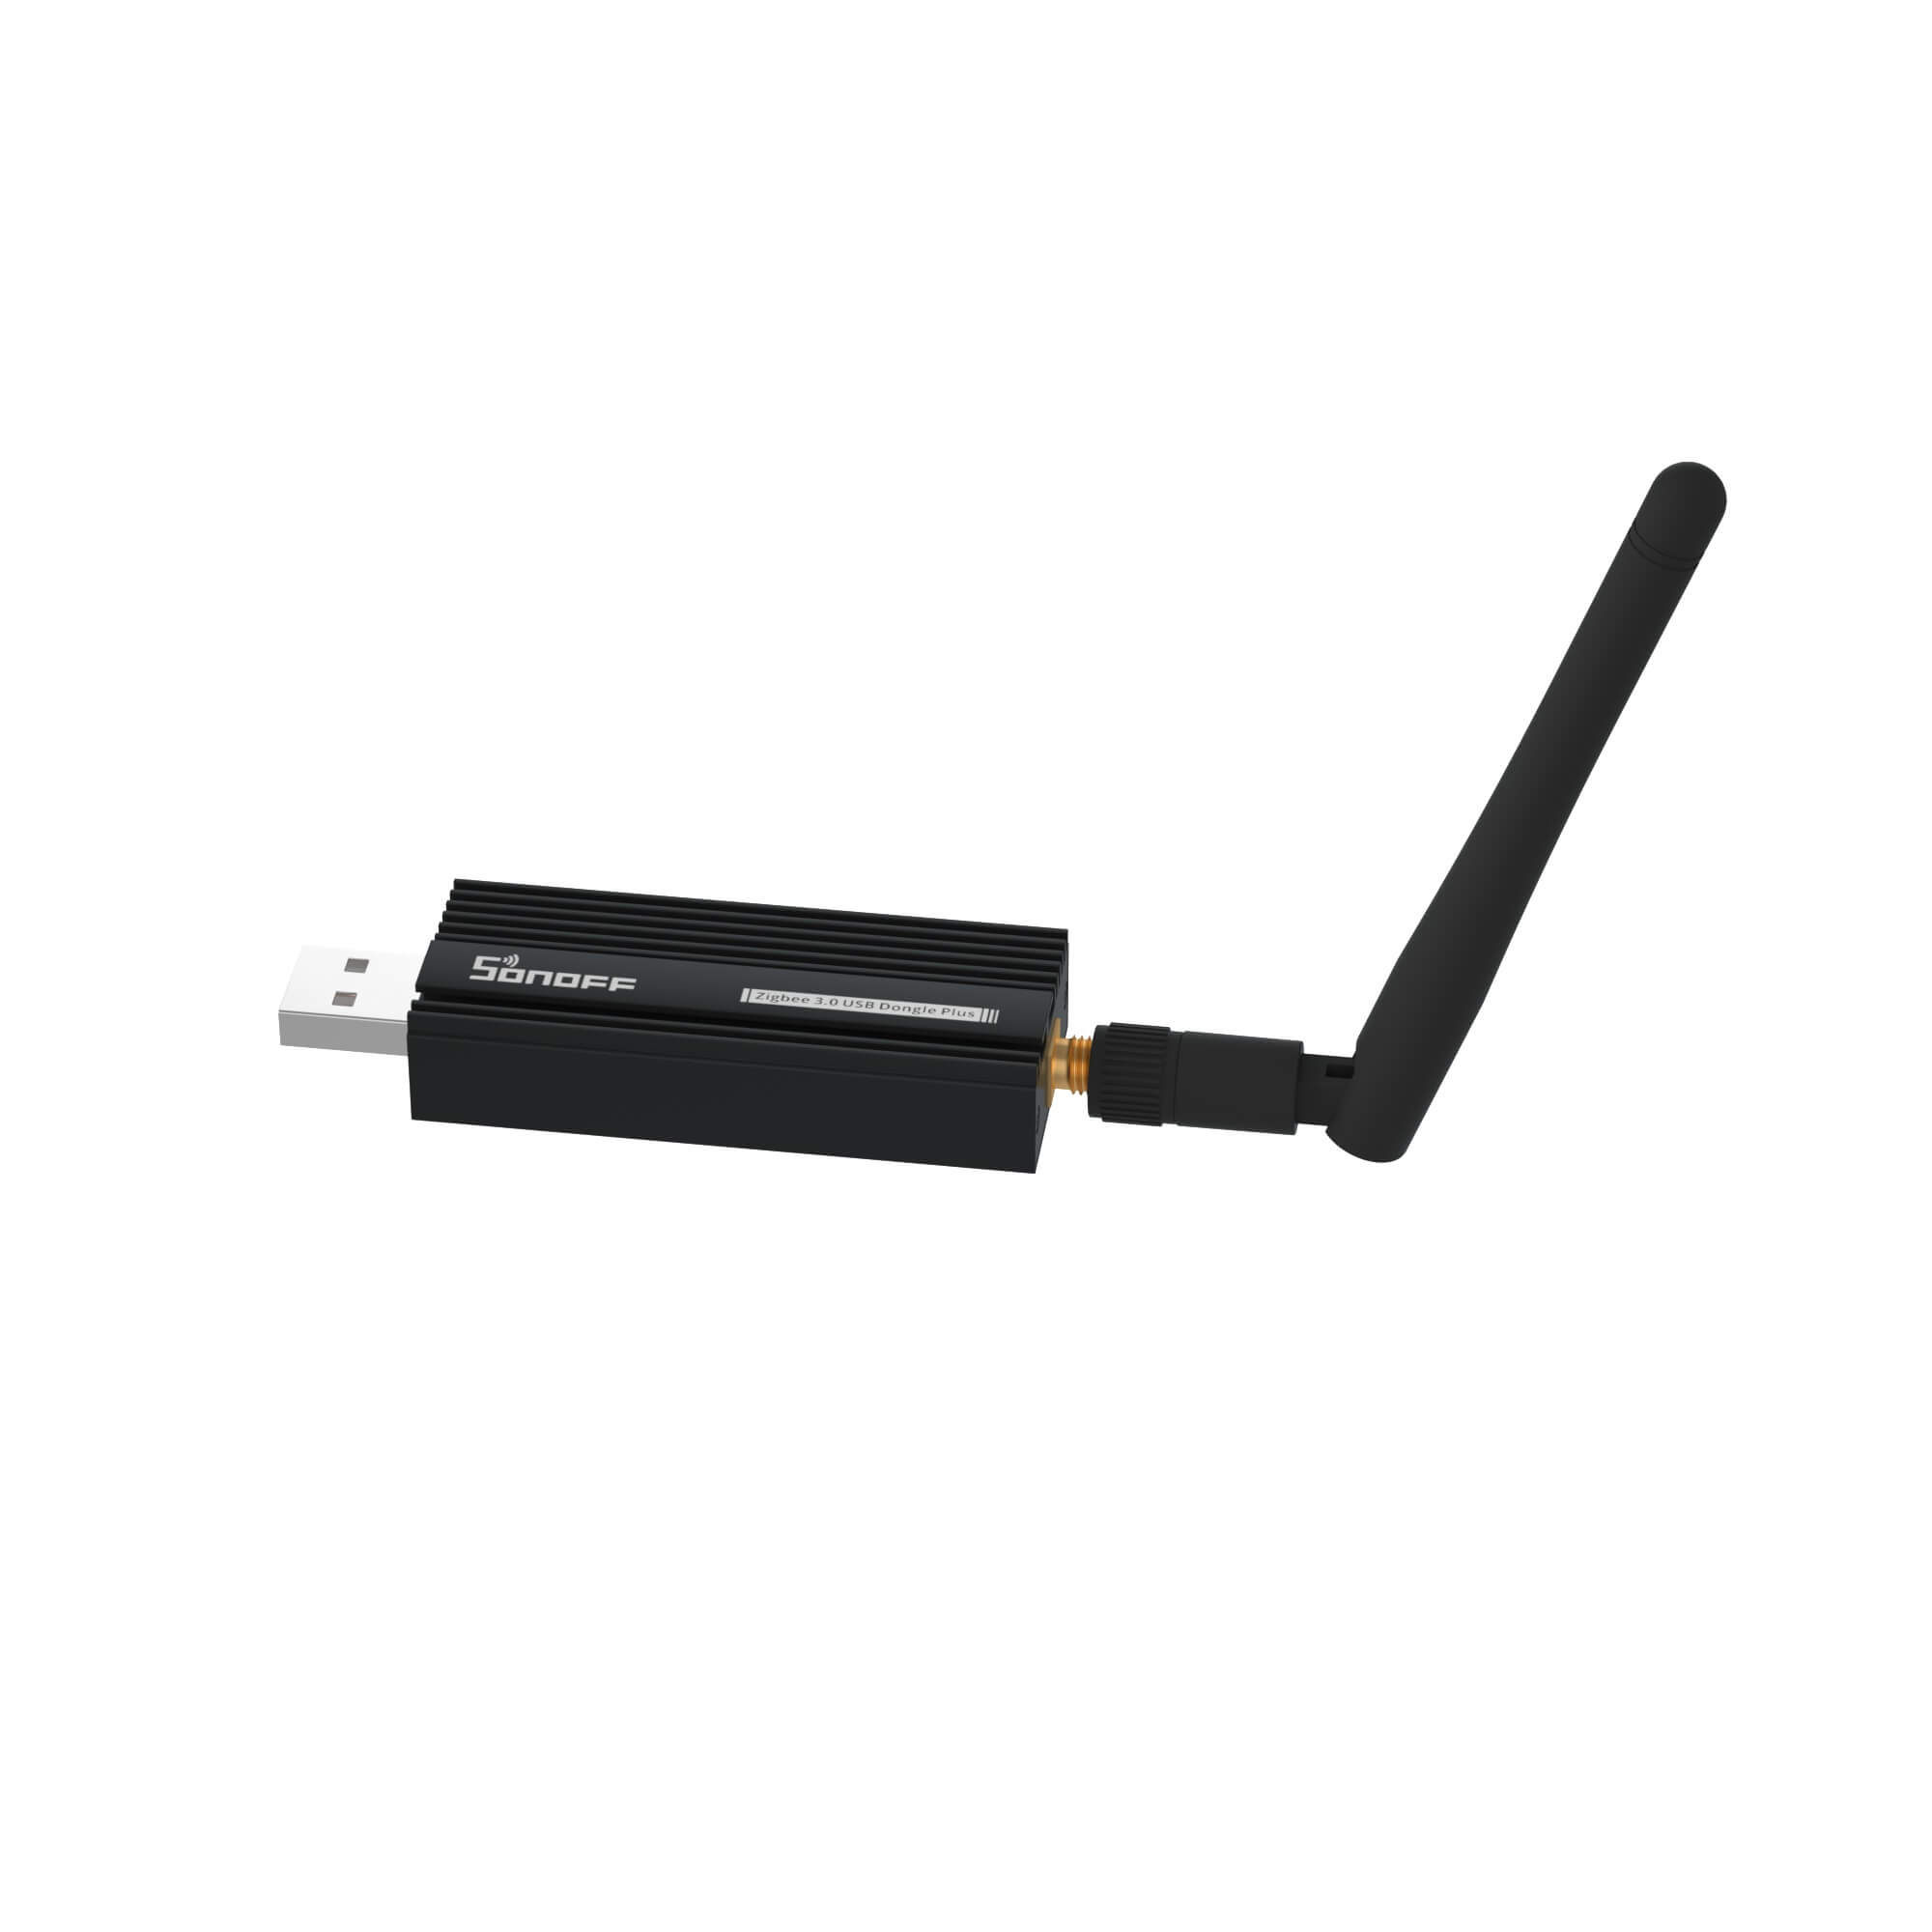 Sonoff ZBDongle-E - ZigBee Gateway - USB Interface Botland - Robotic Shop